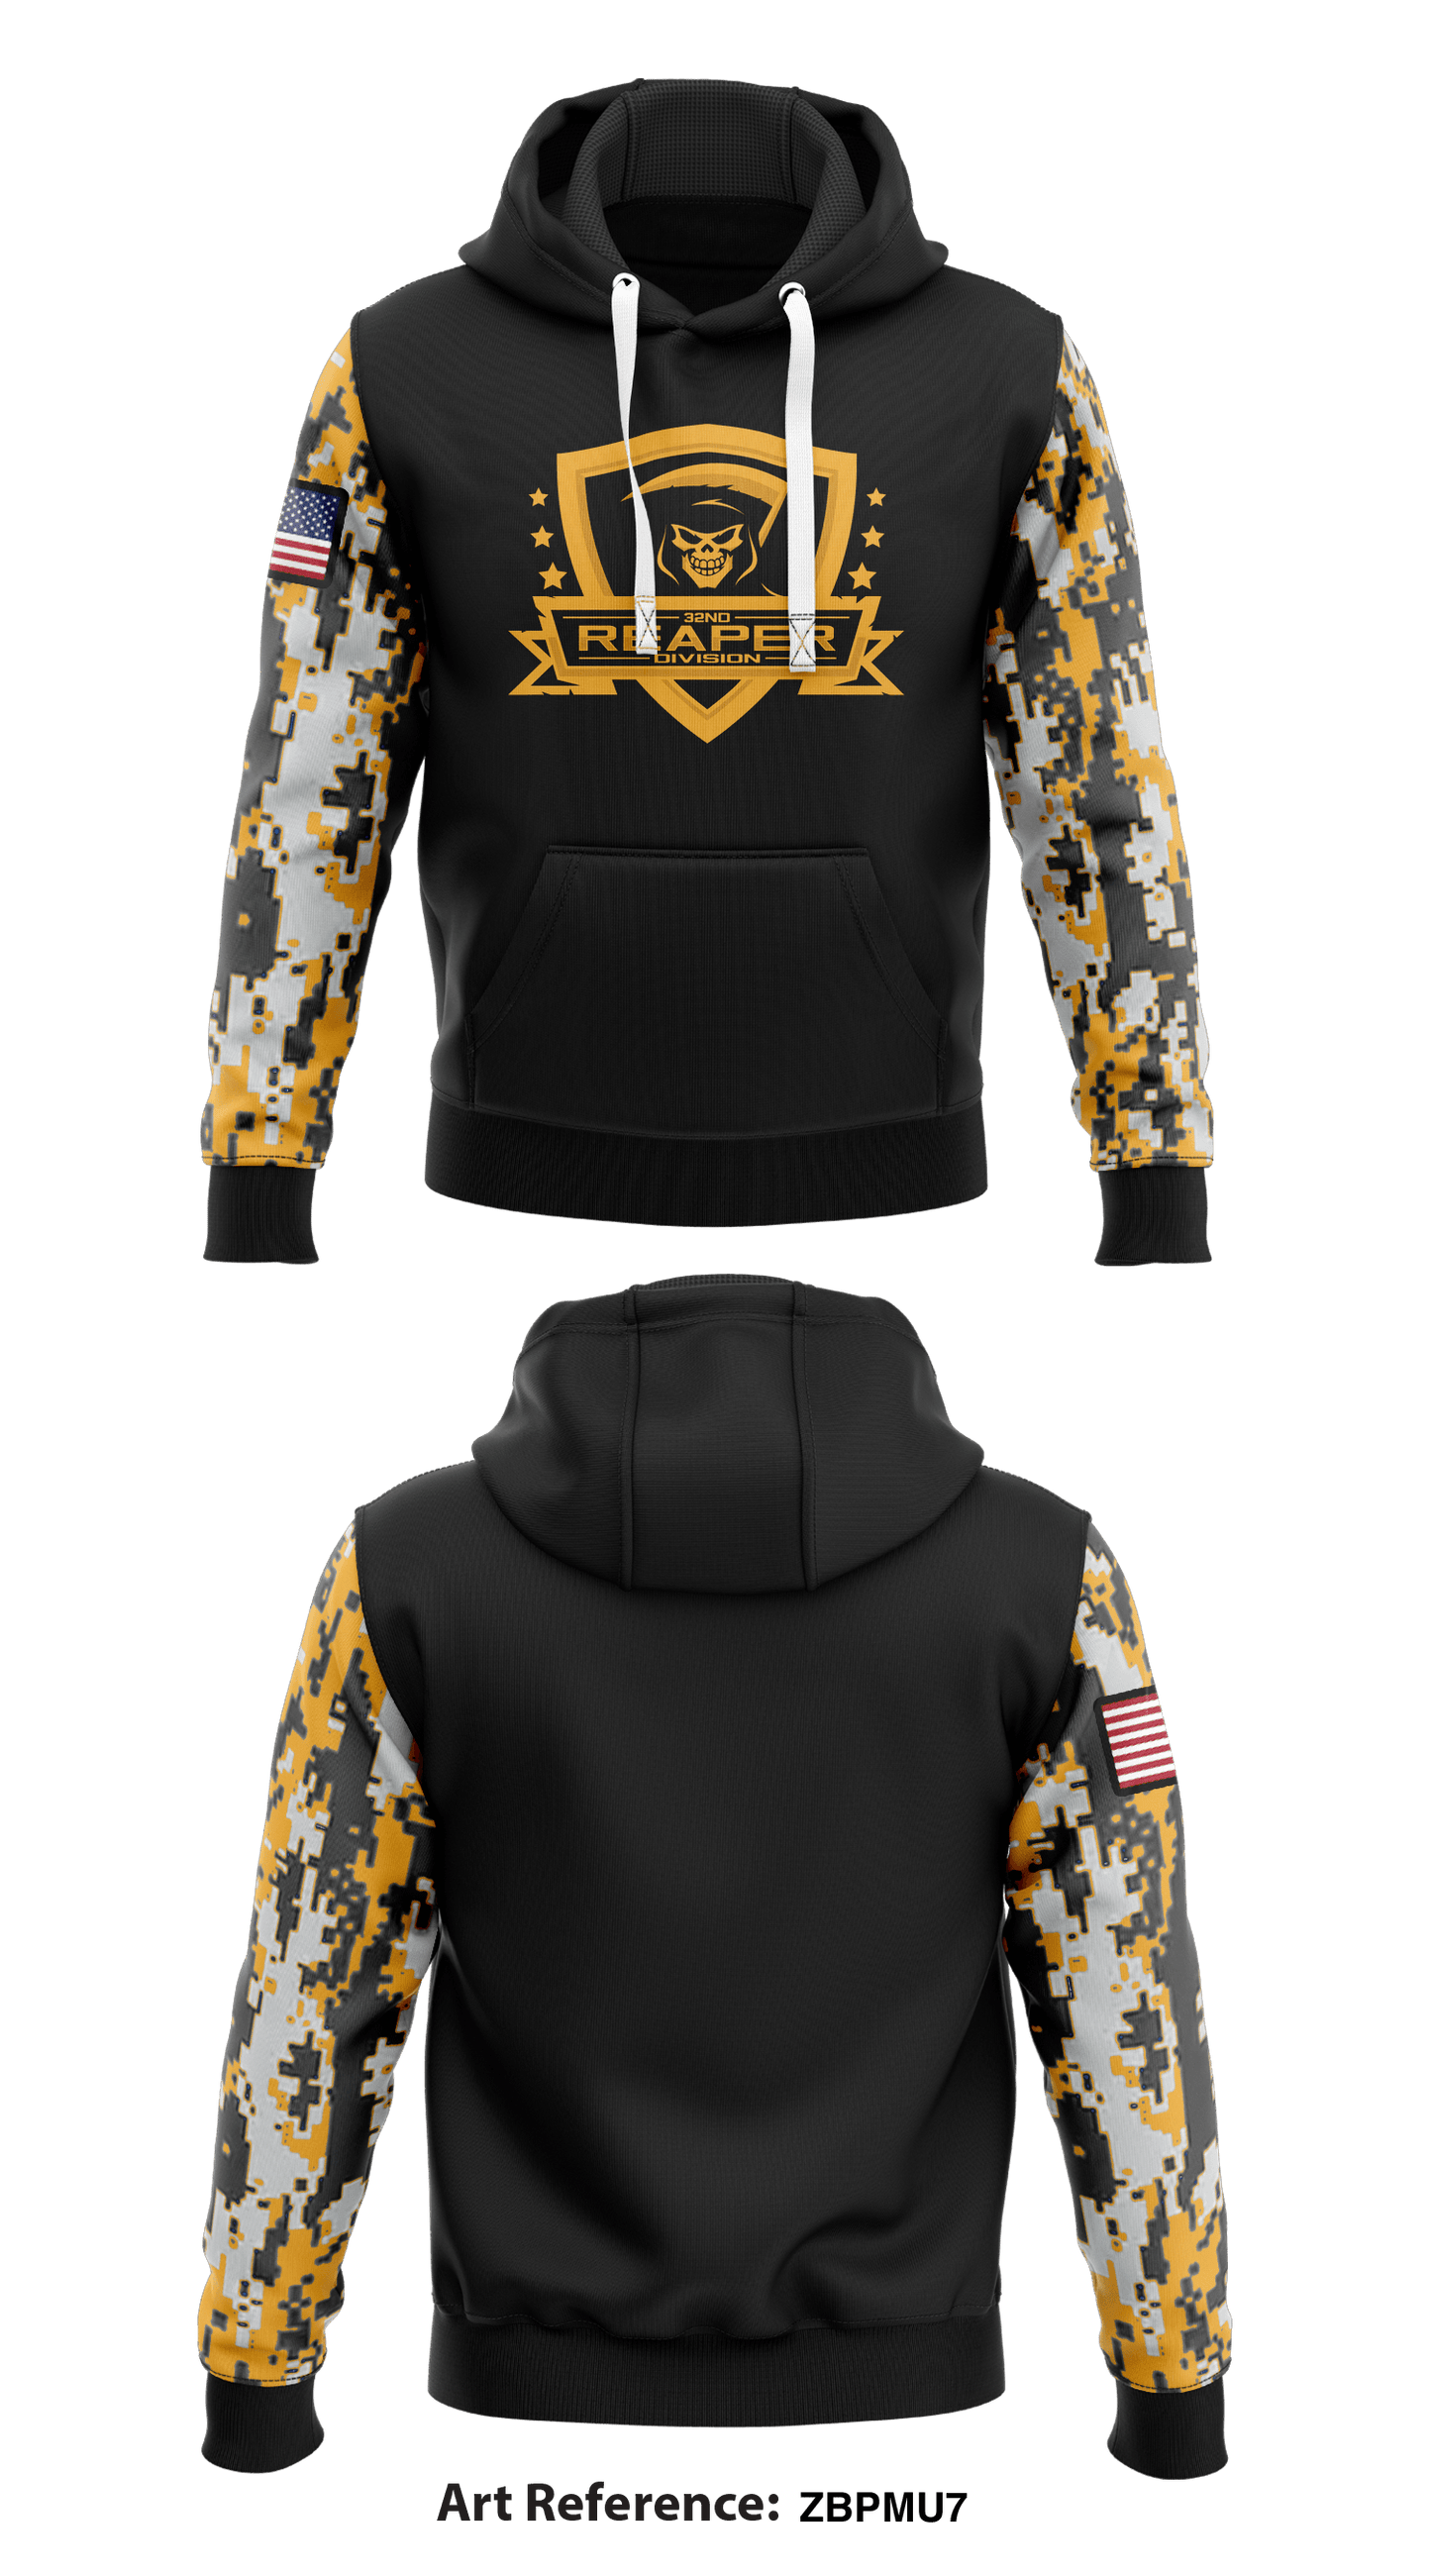 32nd Reaper Division Store 1  Core Men's Hooded Performance Sweatshirt - zBpMU7